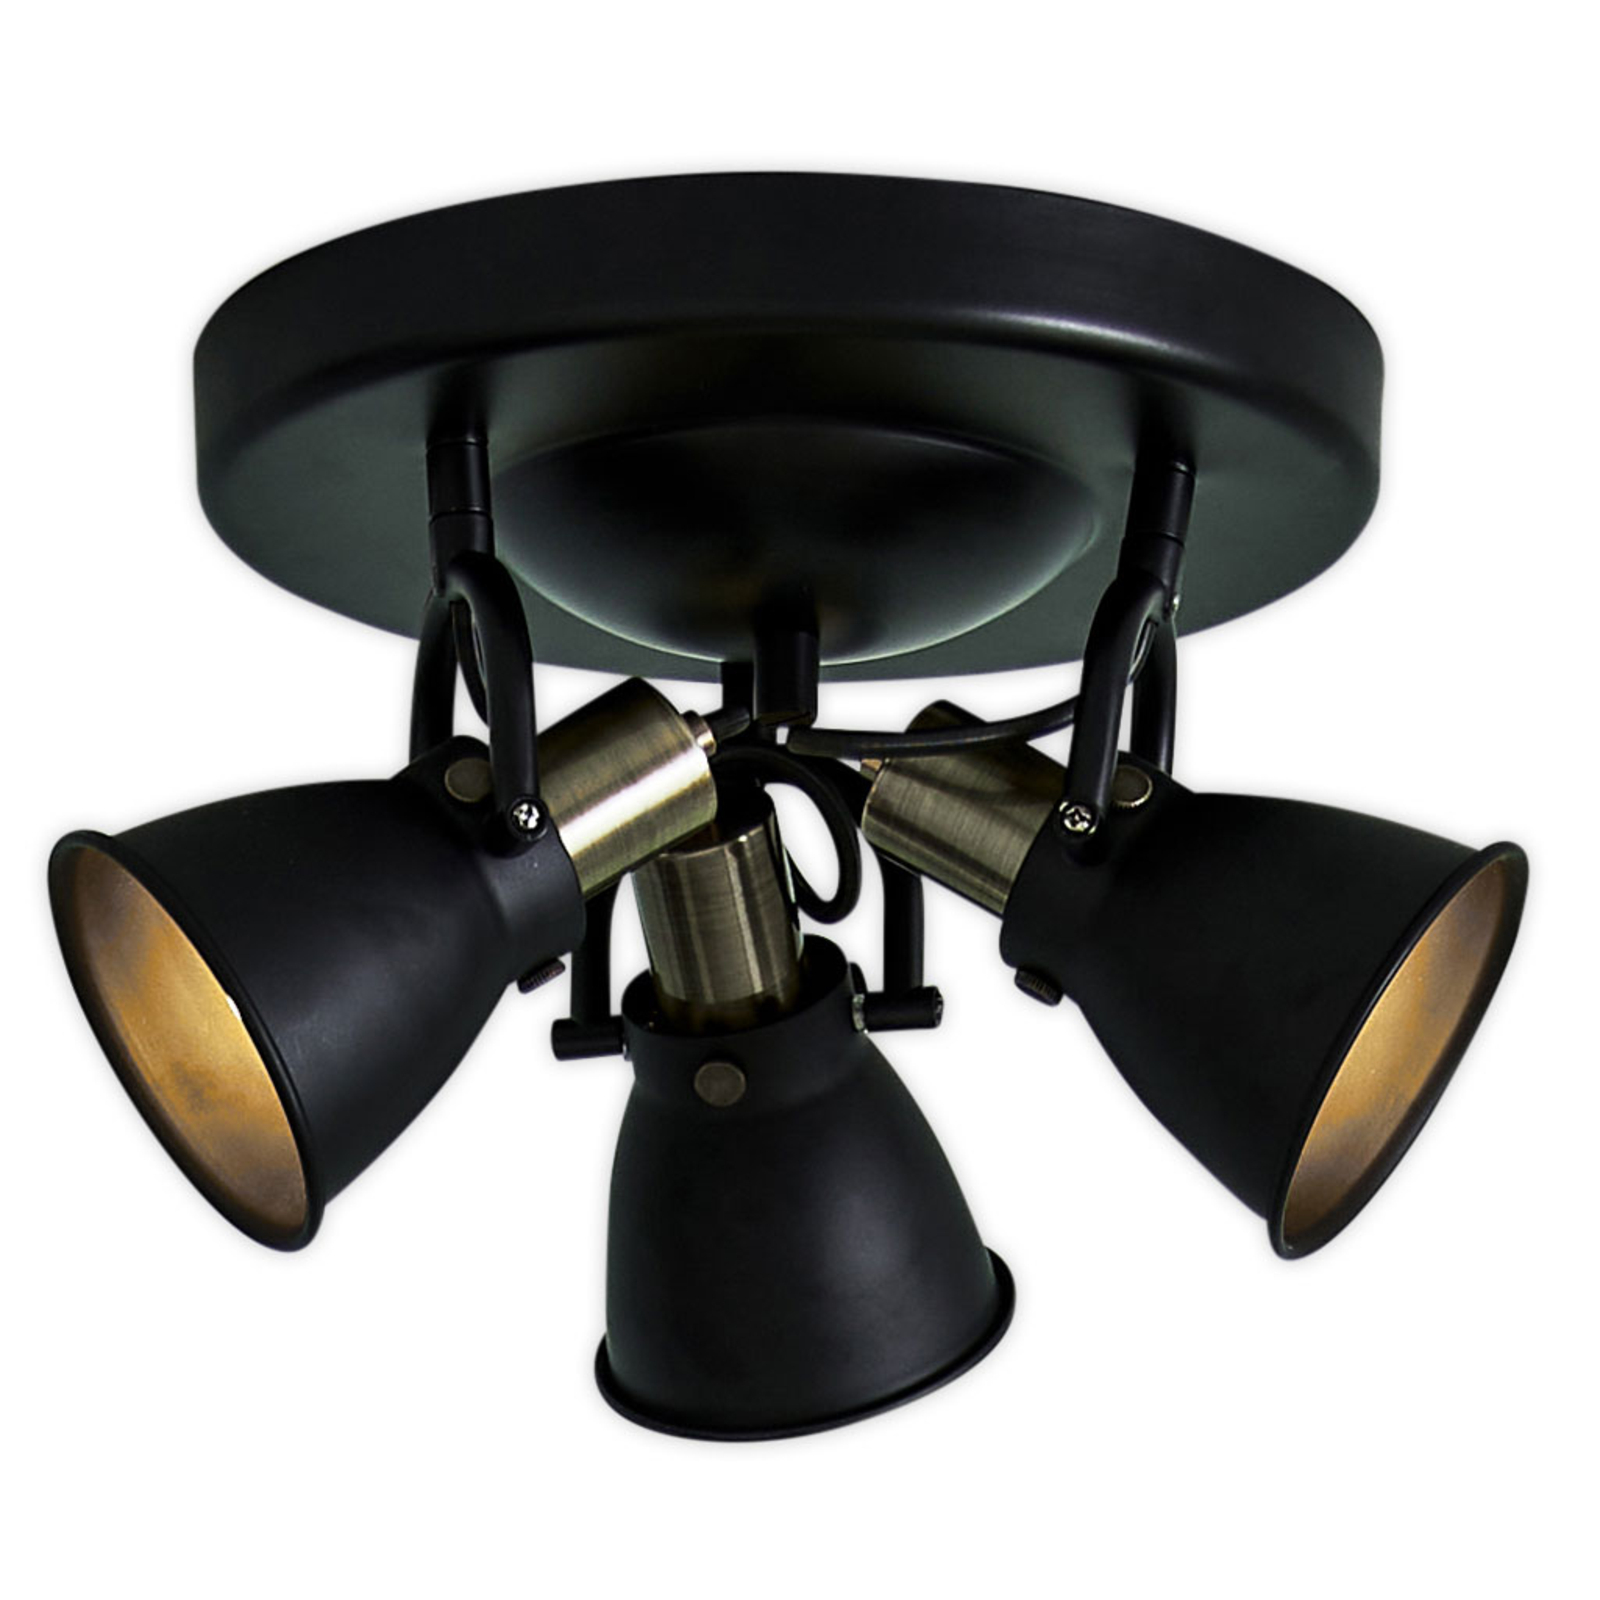 Alton ceiling light in black, spots adjustable